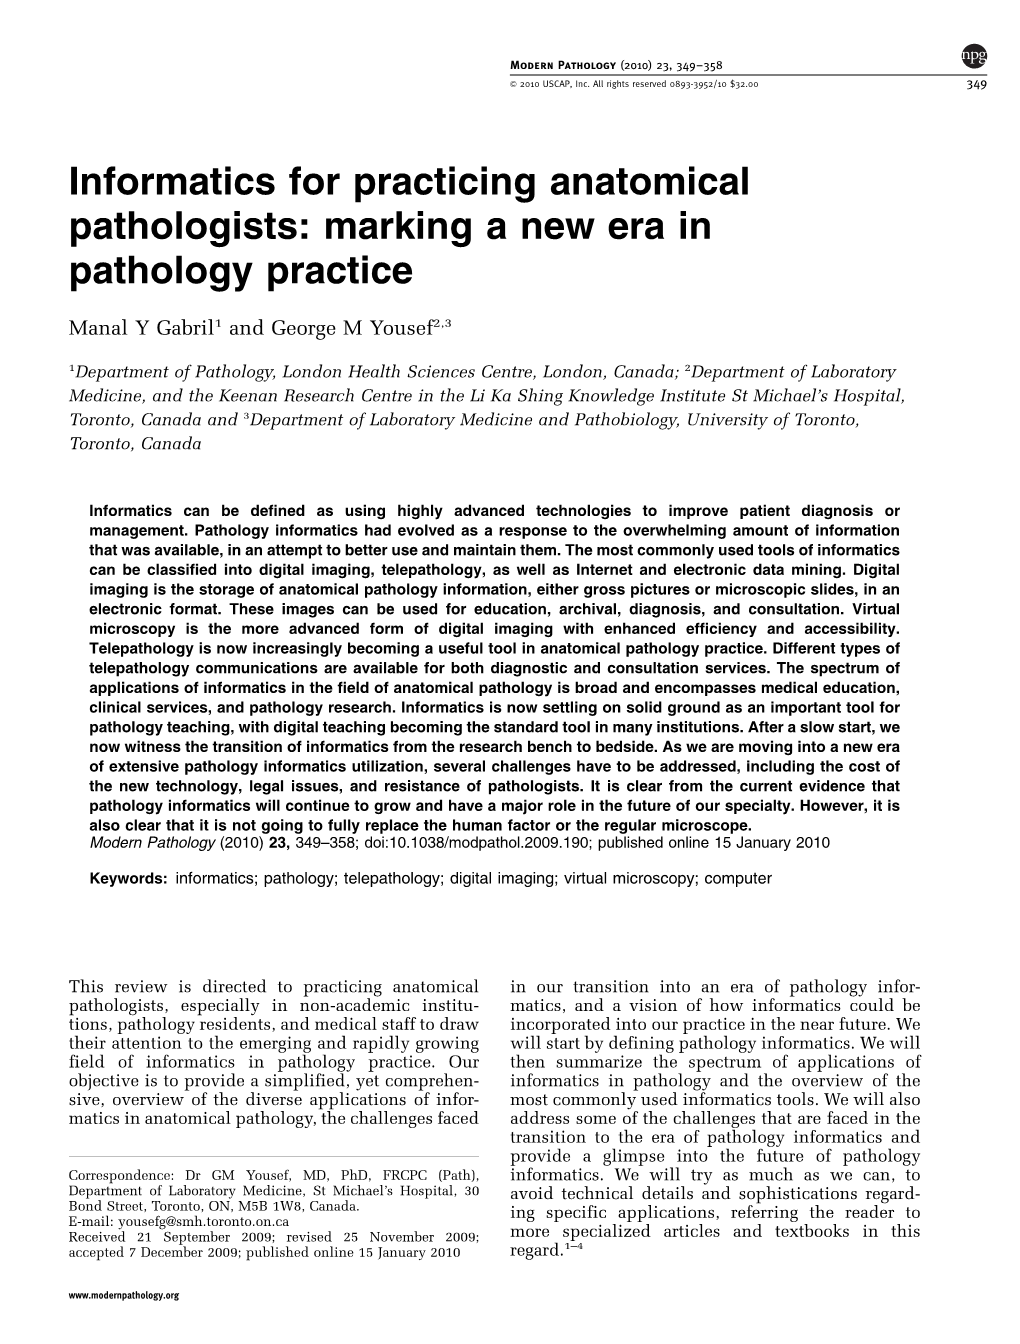 Informatics for Practicing Anatomical Pathologists: Marking a New Era in Pathology Practice